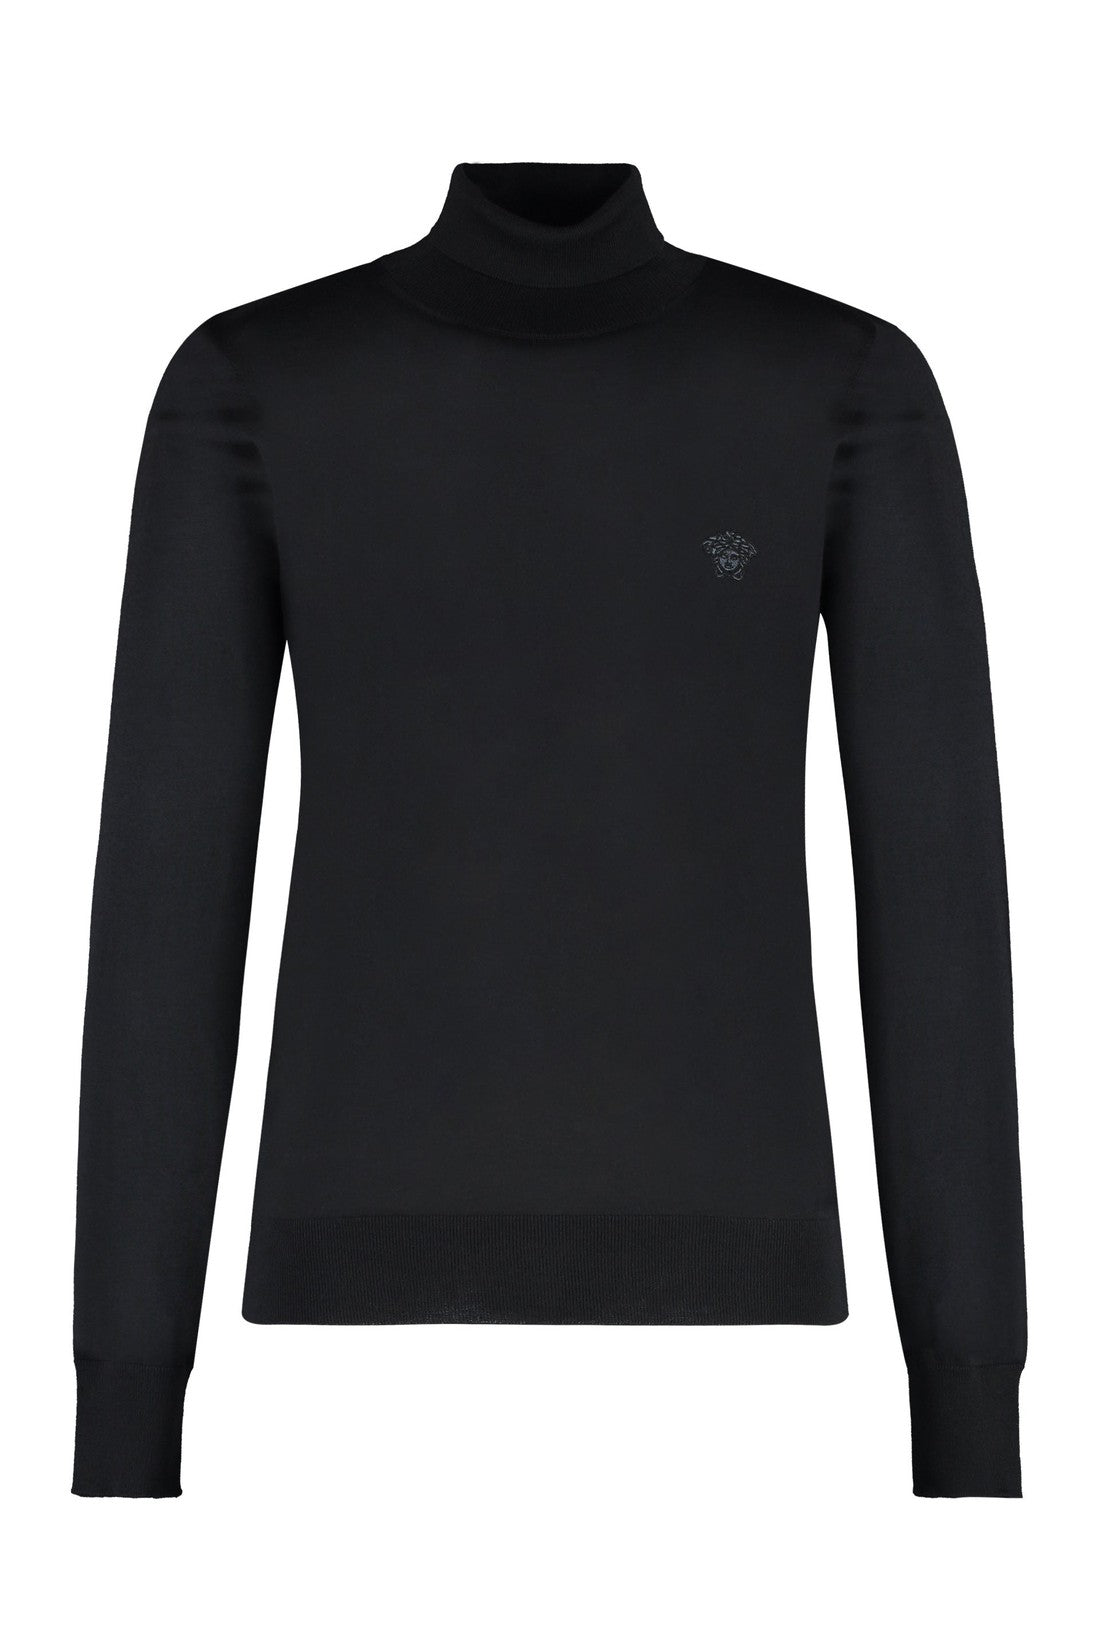 Versace-OUTLET-SALE-Wool blend turtleneck sweater-ARCHIVIST